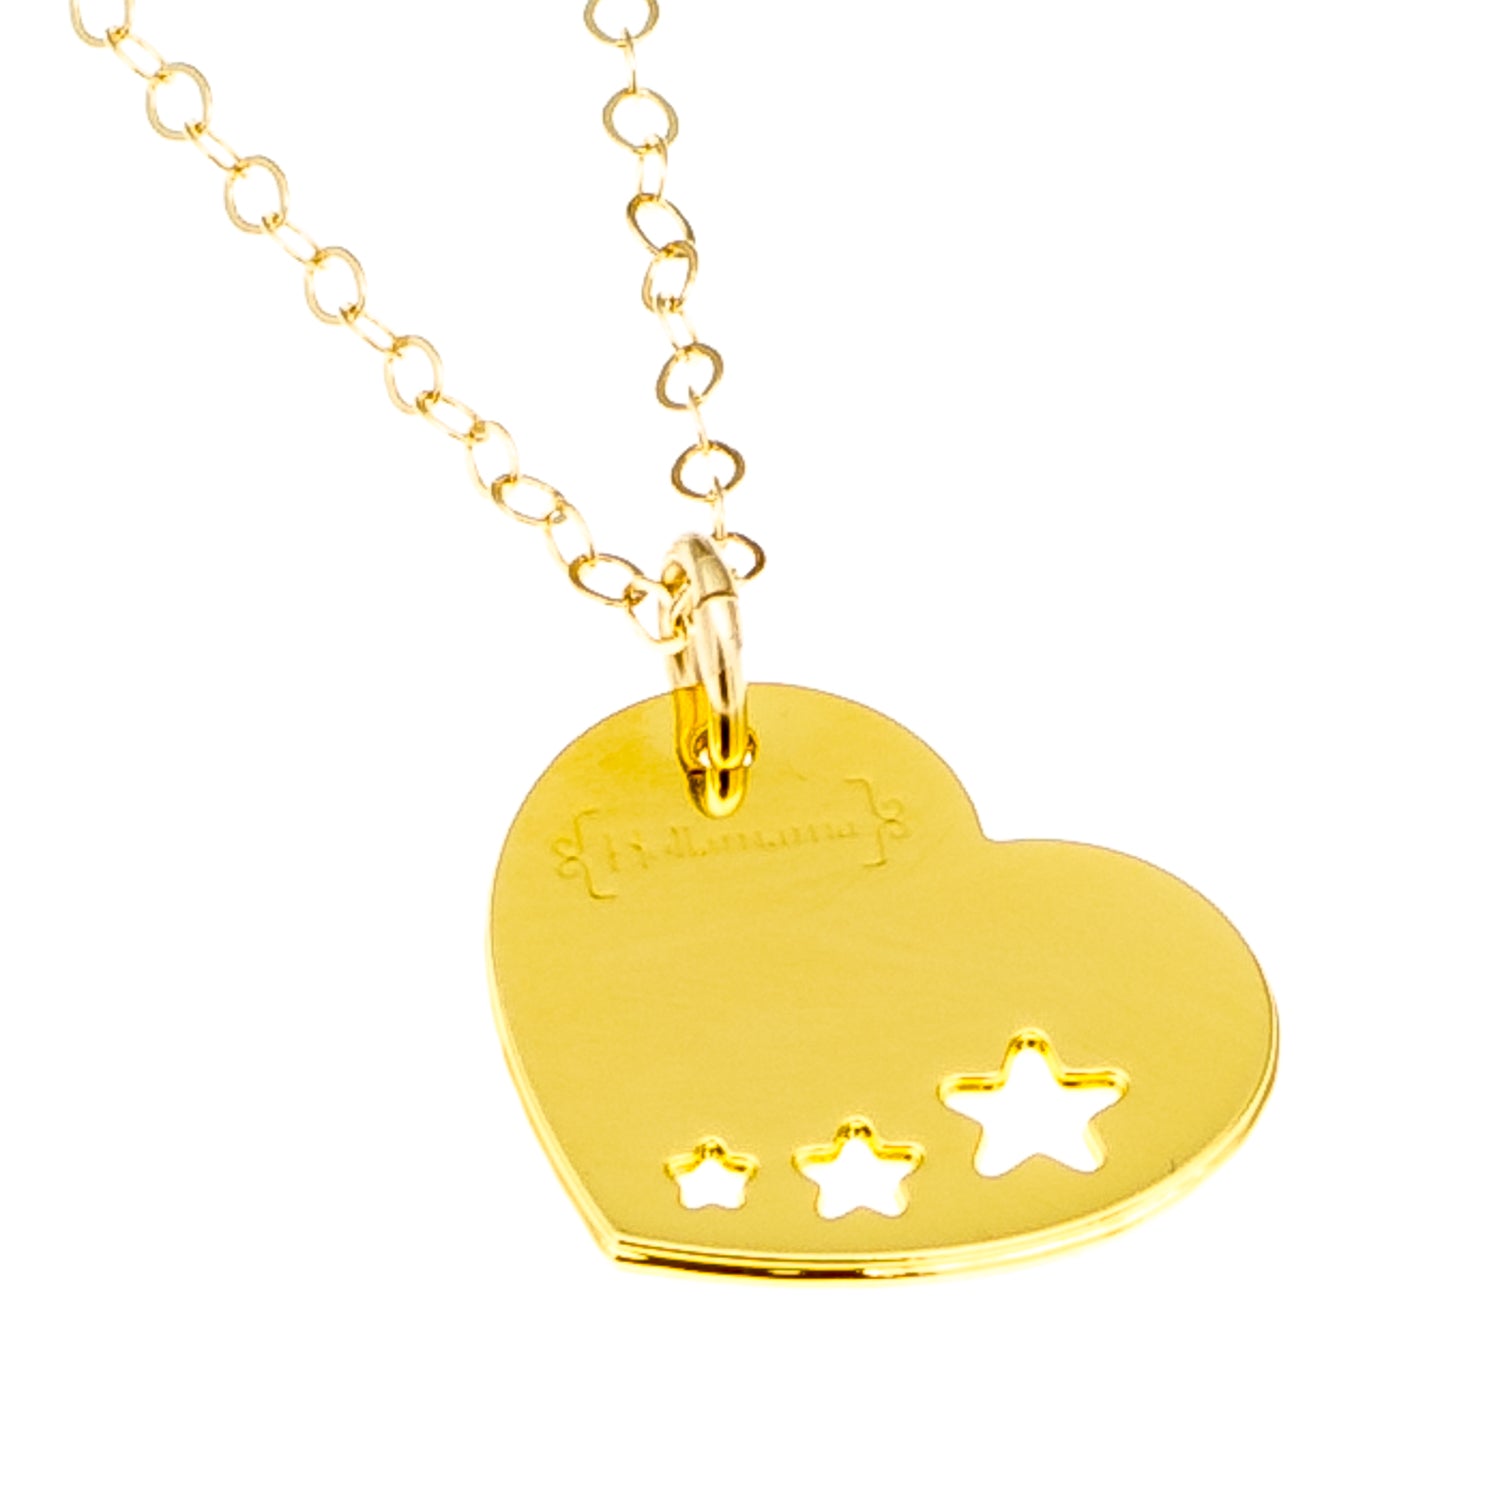 Heart Full of Stars Necklace